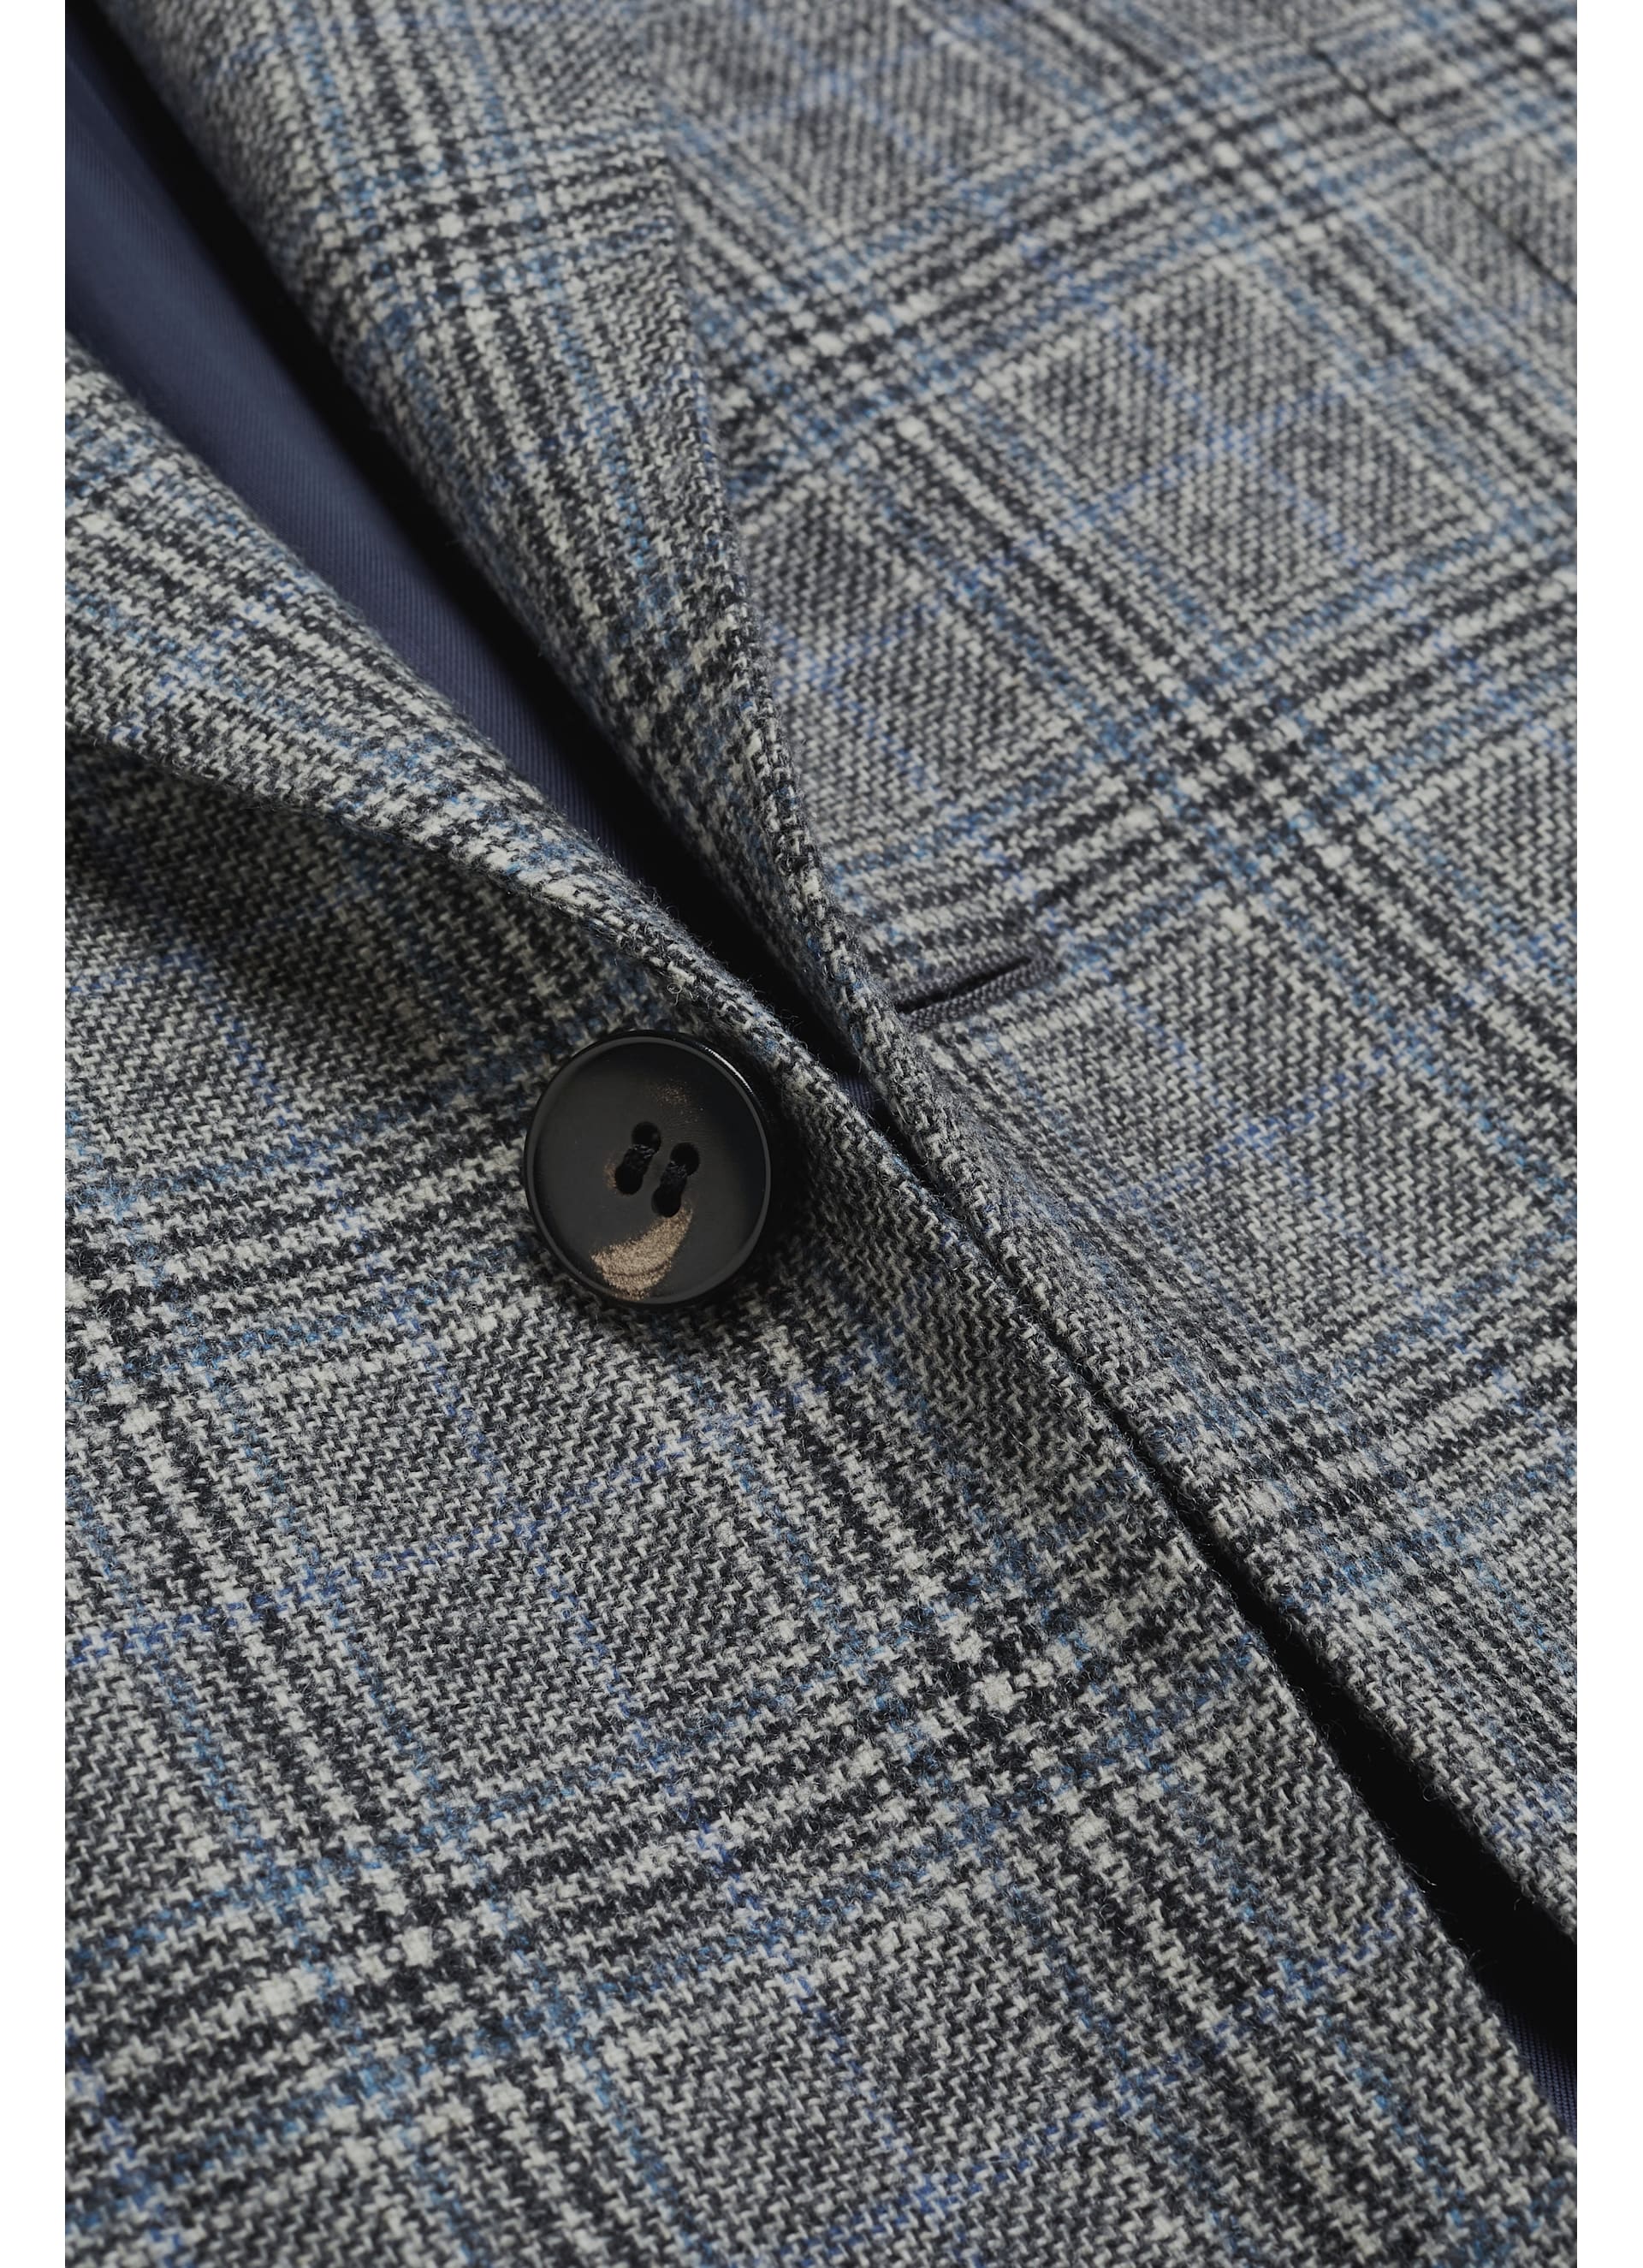 Suit Grey Check Havana P5259i | Suitsupply Online Store